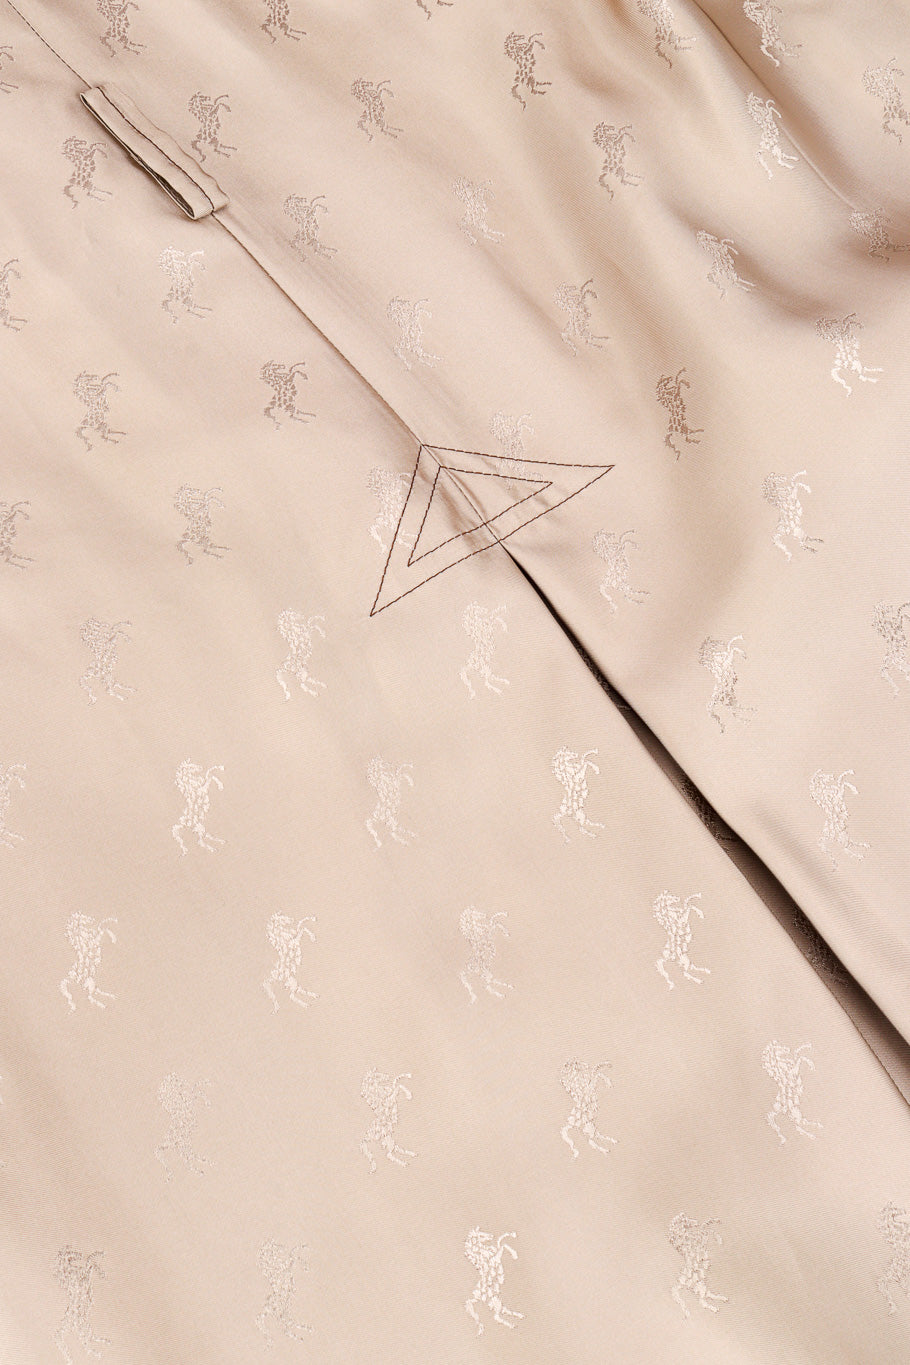 Chloé Equin Print Plaid Trench Coat back stitch detail closeup @recessla